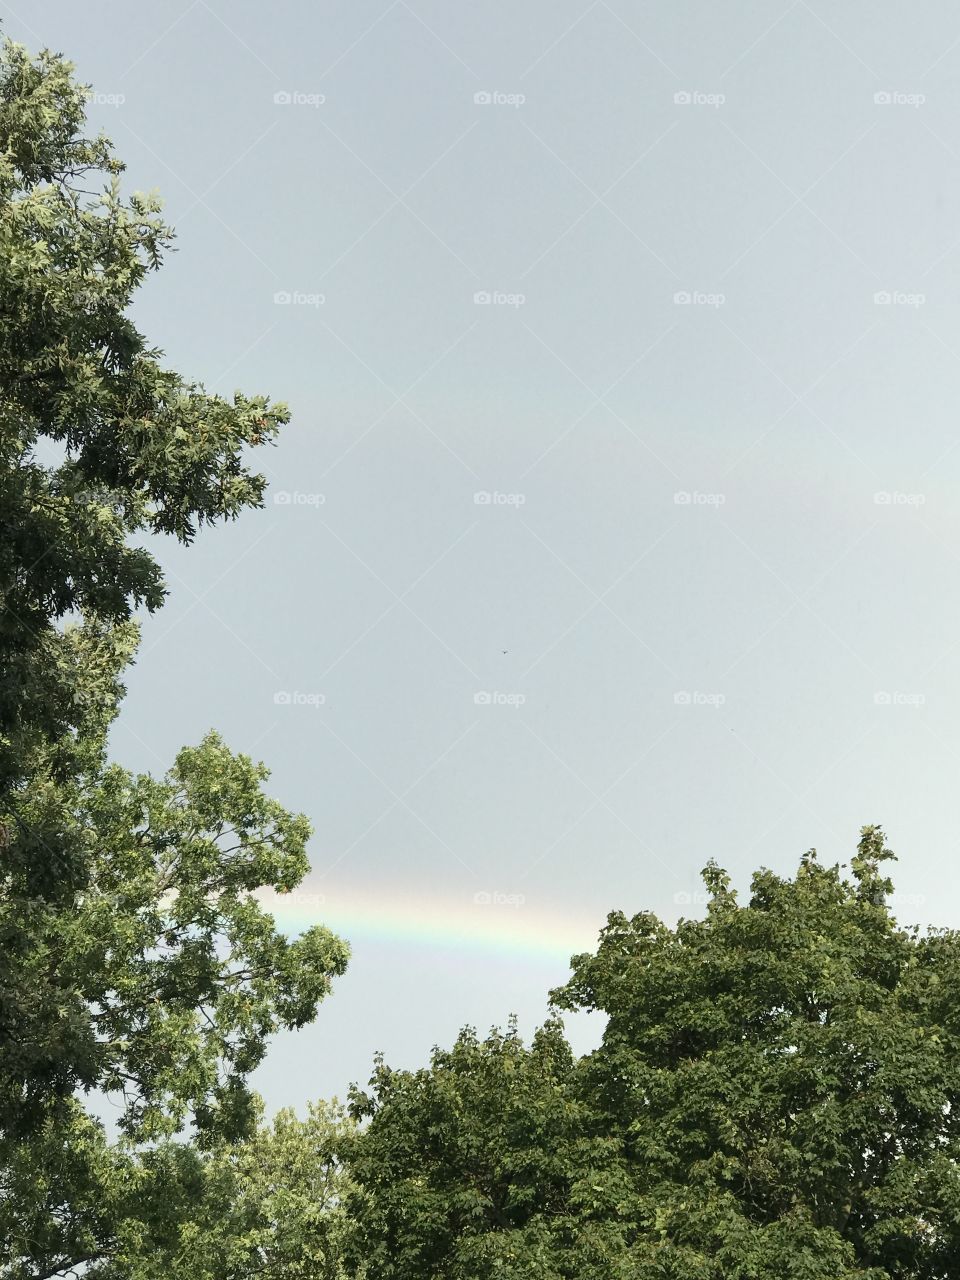 The luck of a rainbow